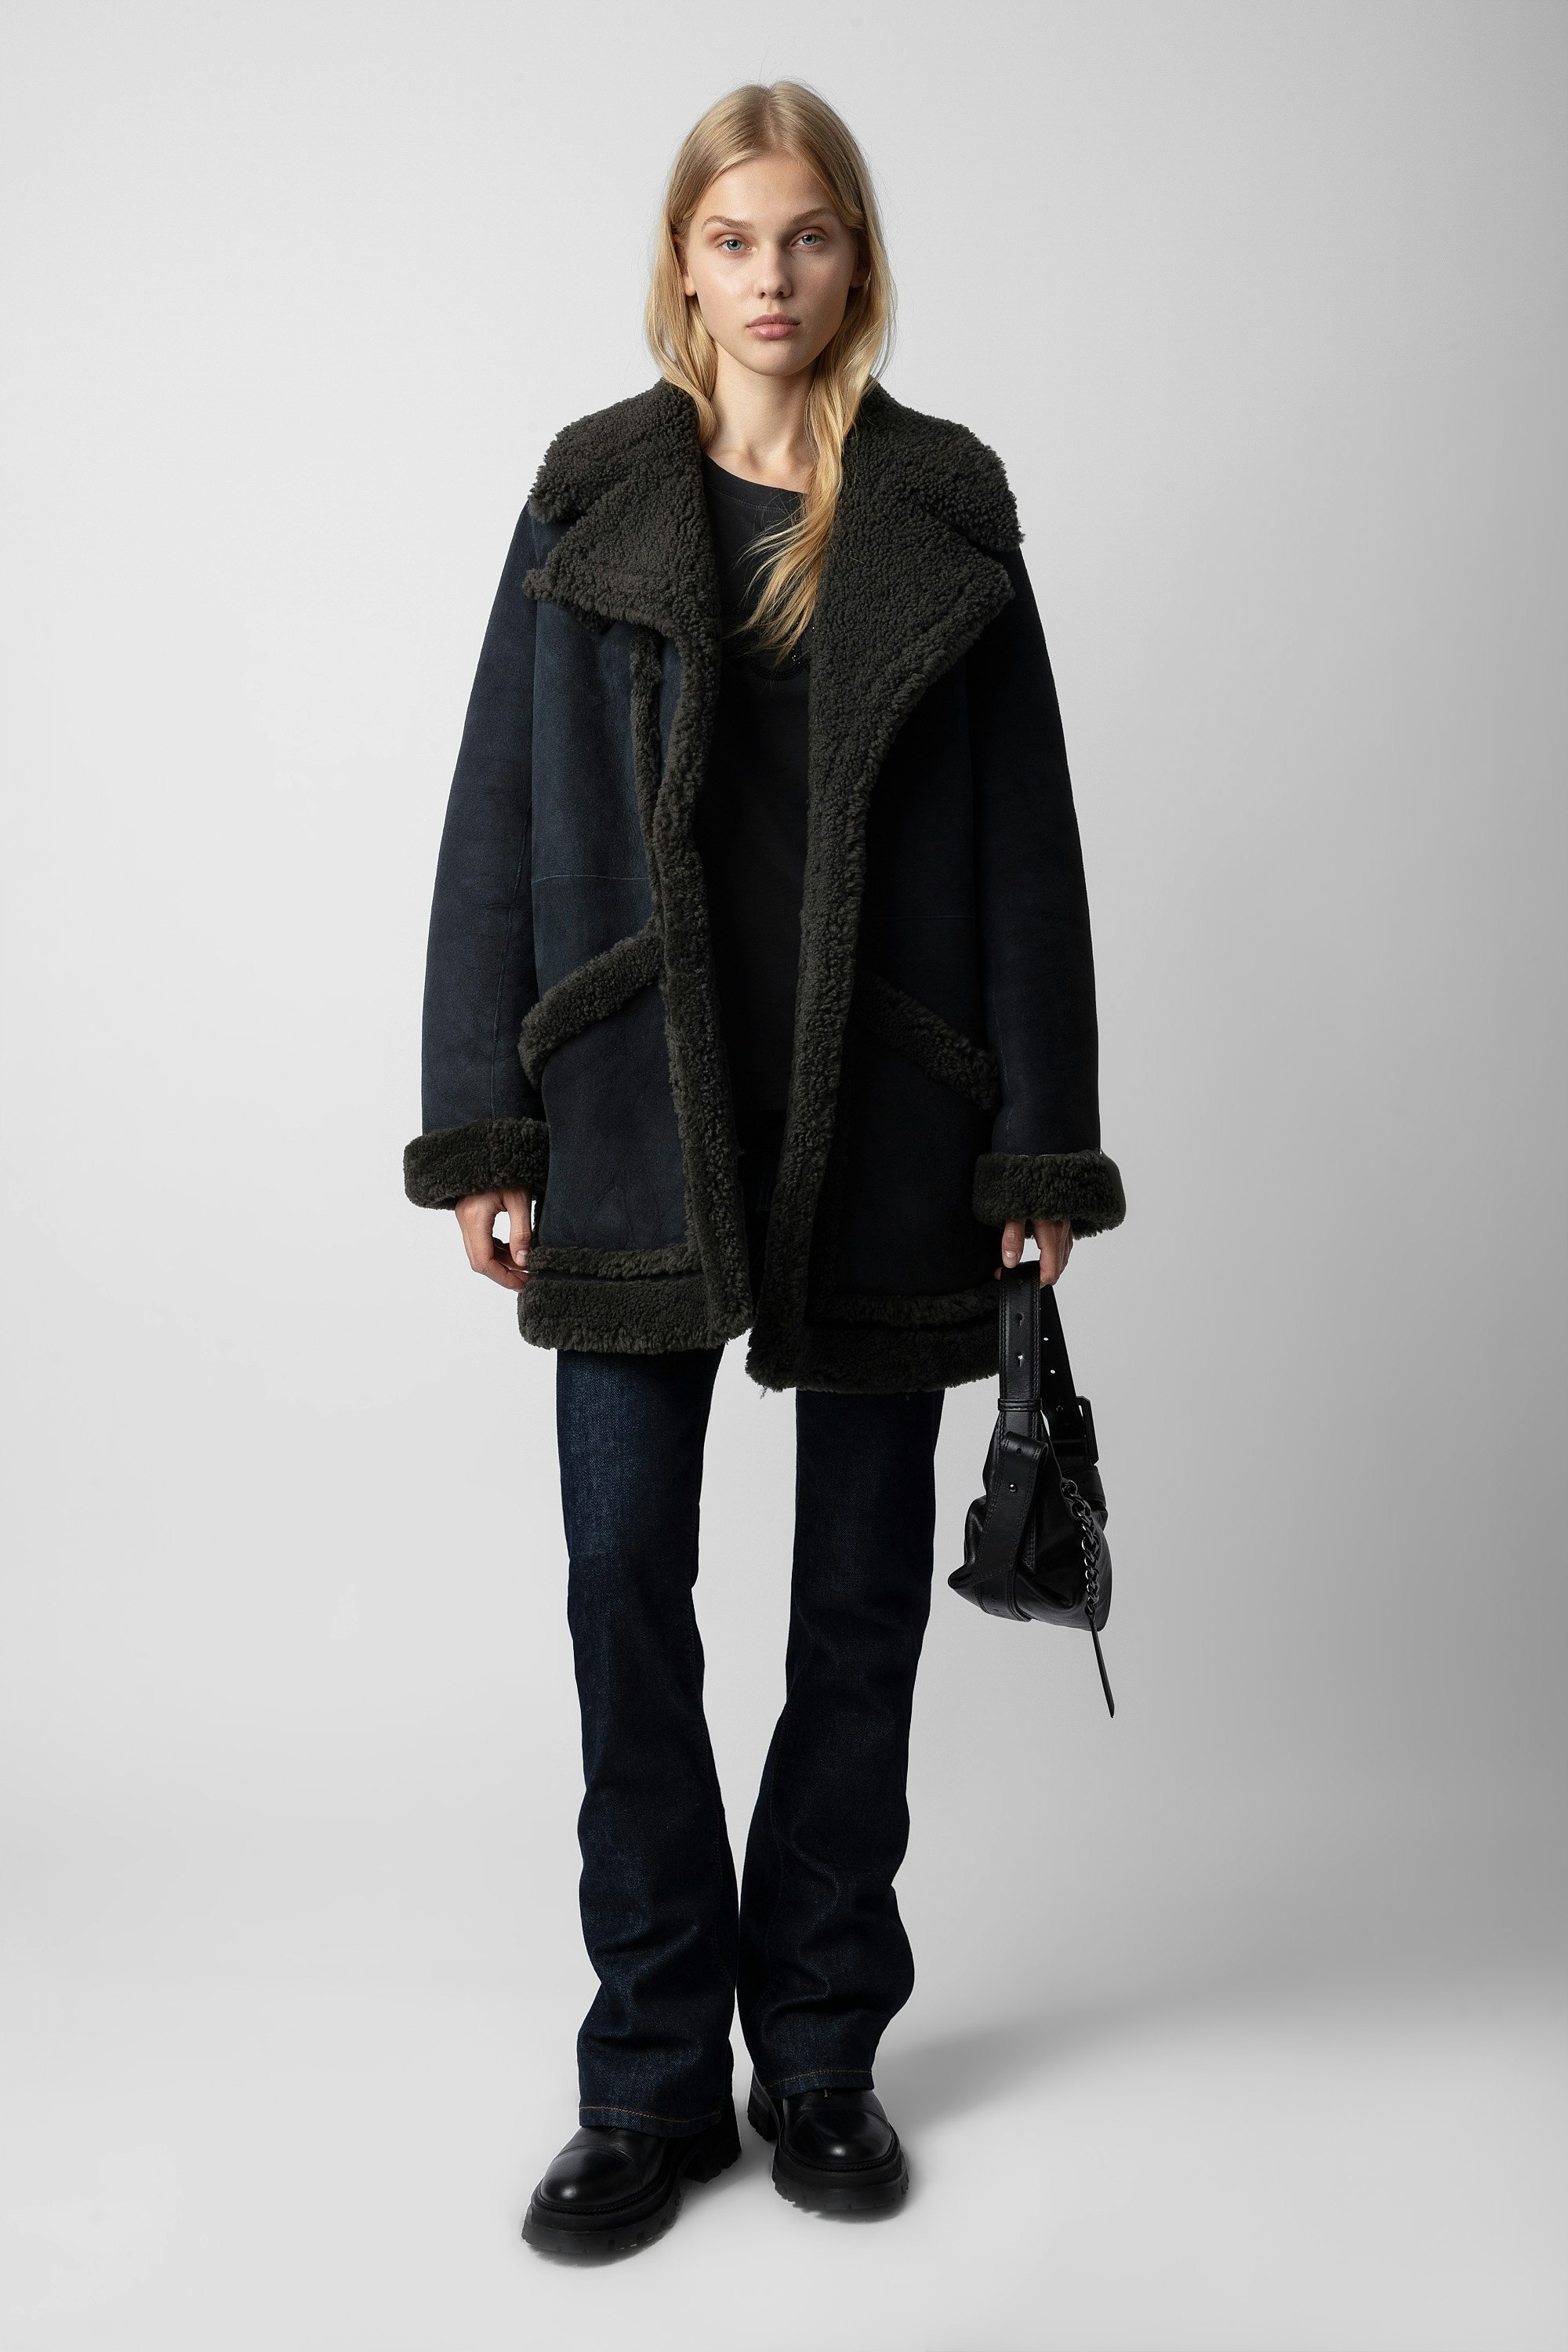 Laury シェアリングコート - Women’s black shearling coat